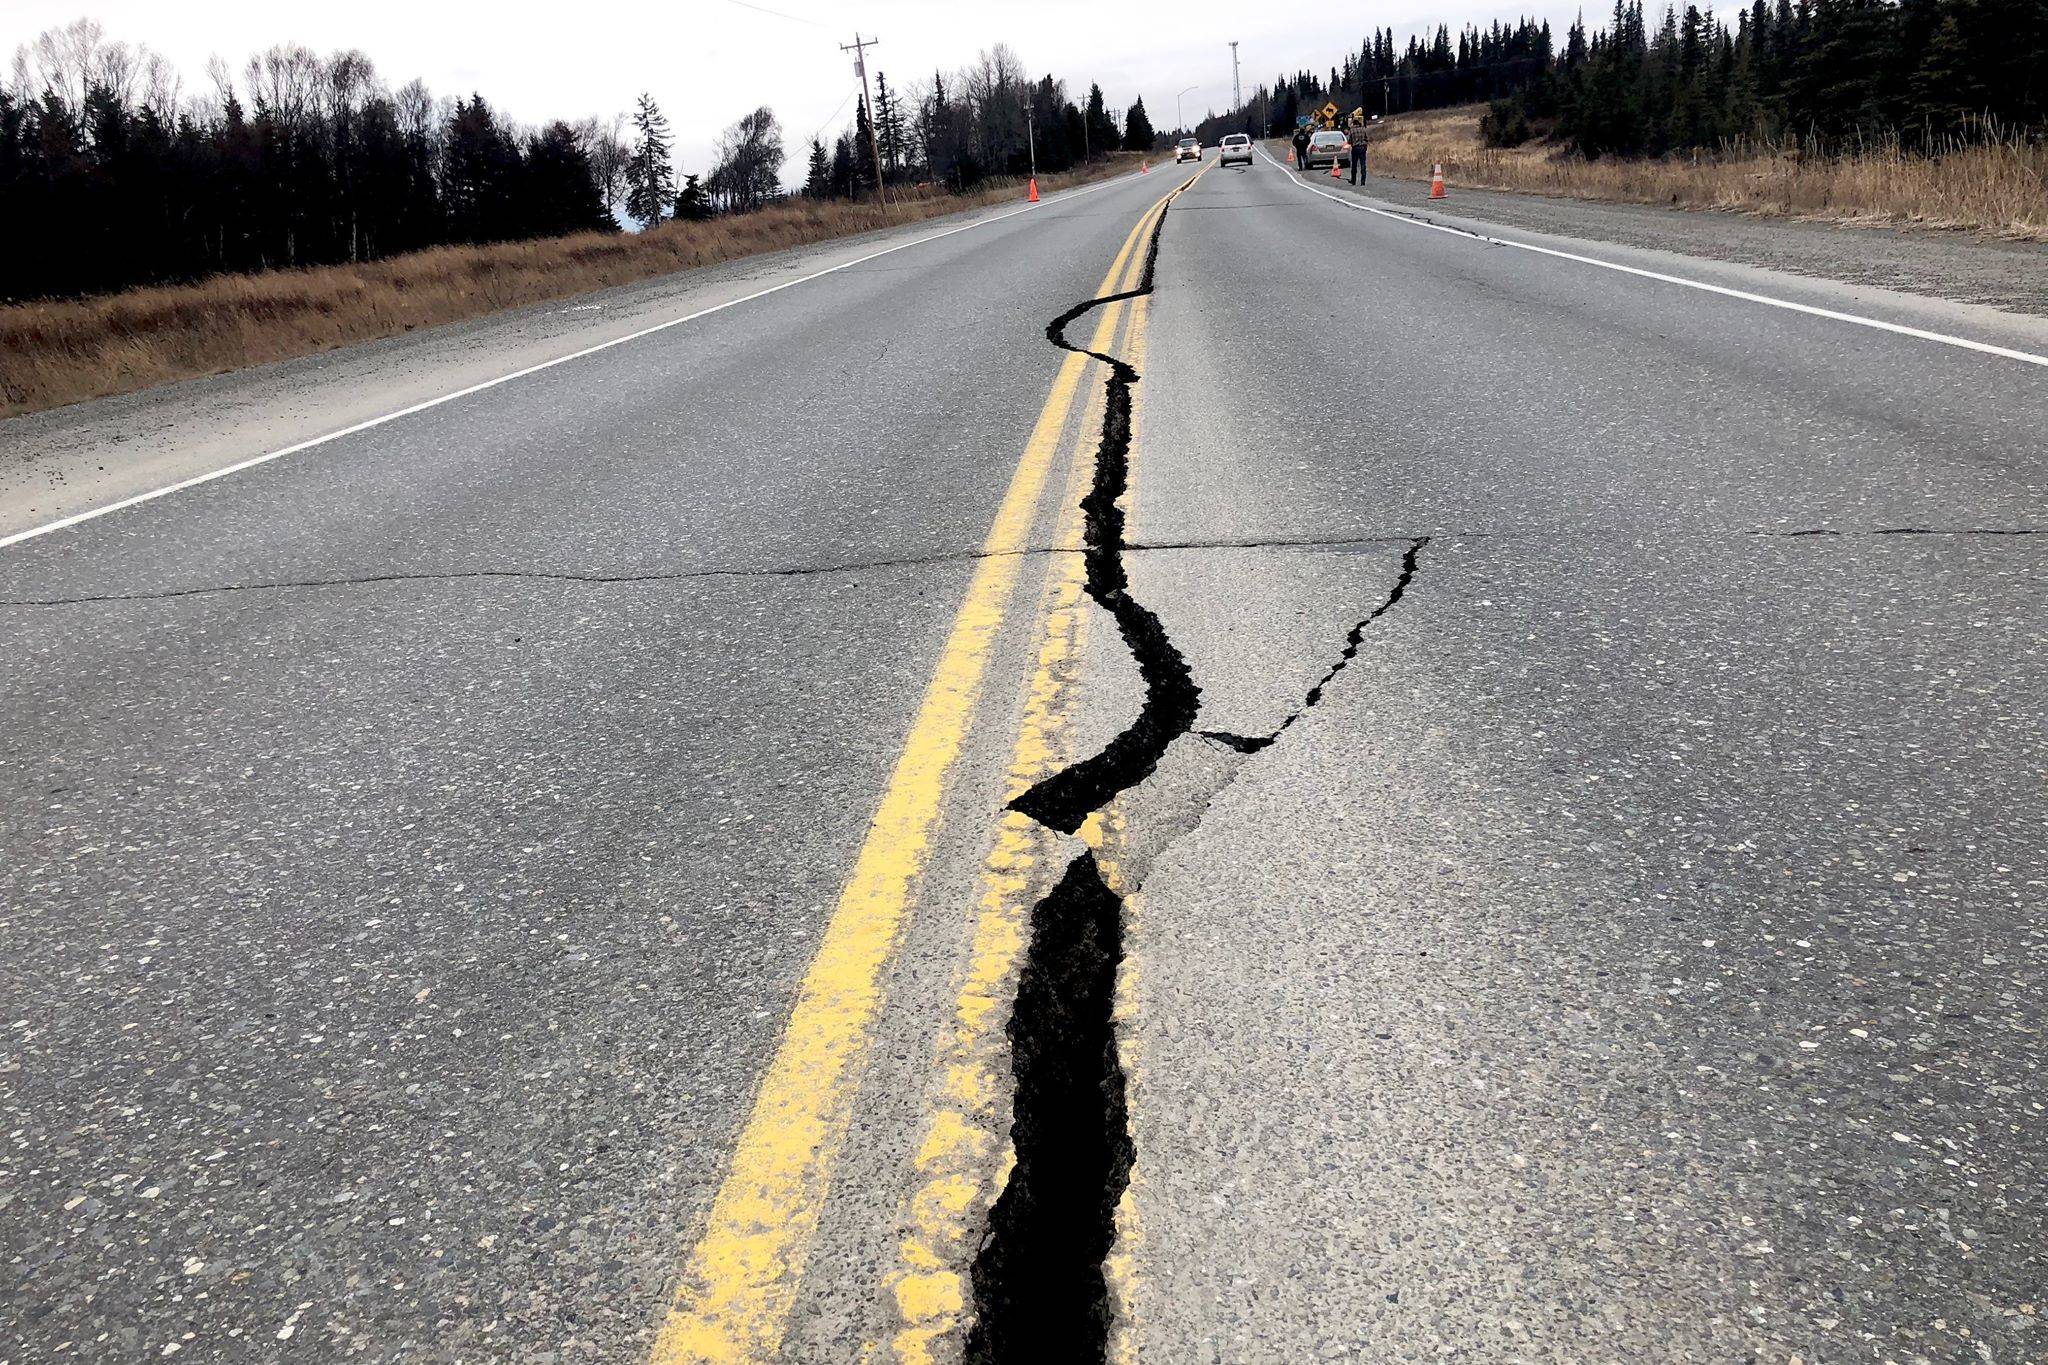 Peninsula faces minimal damage after Friday’s quake